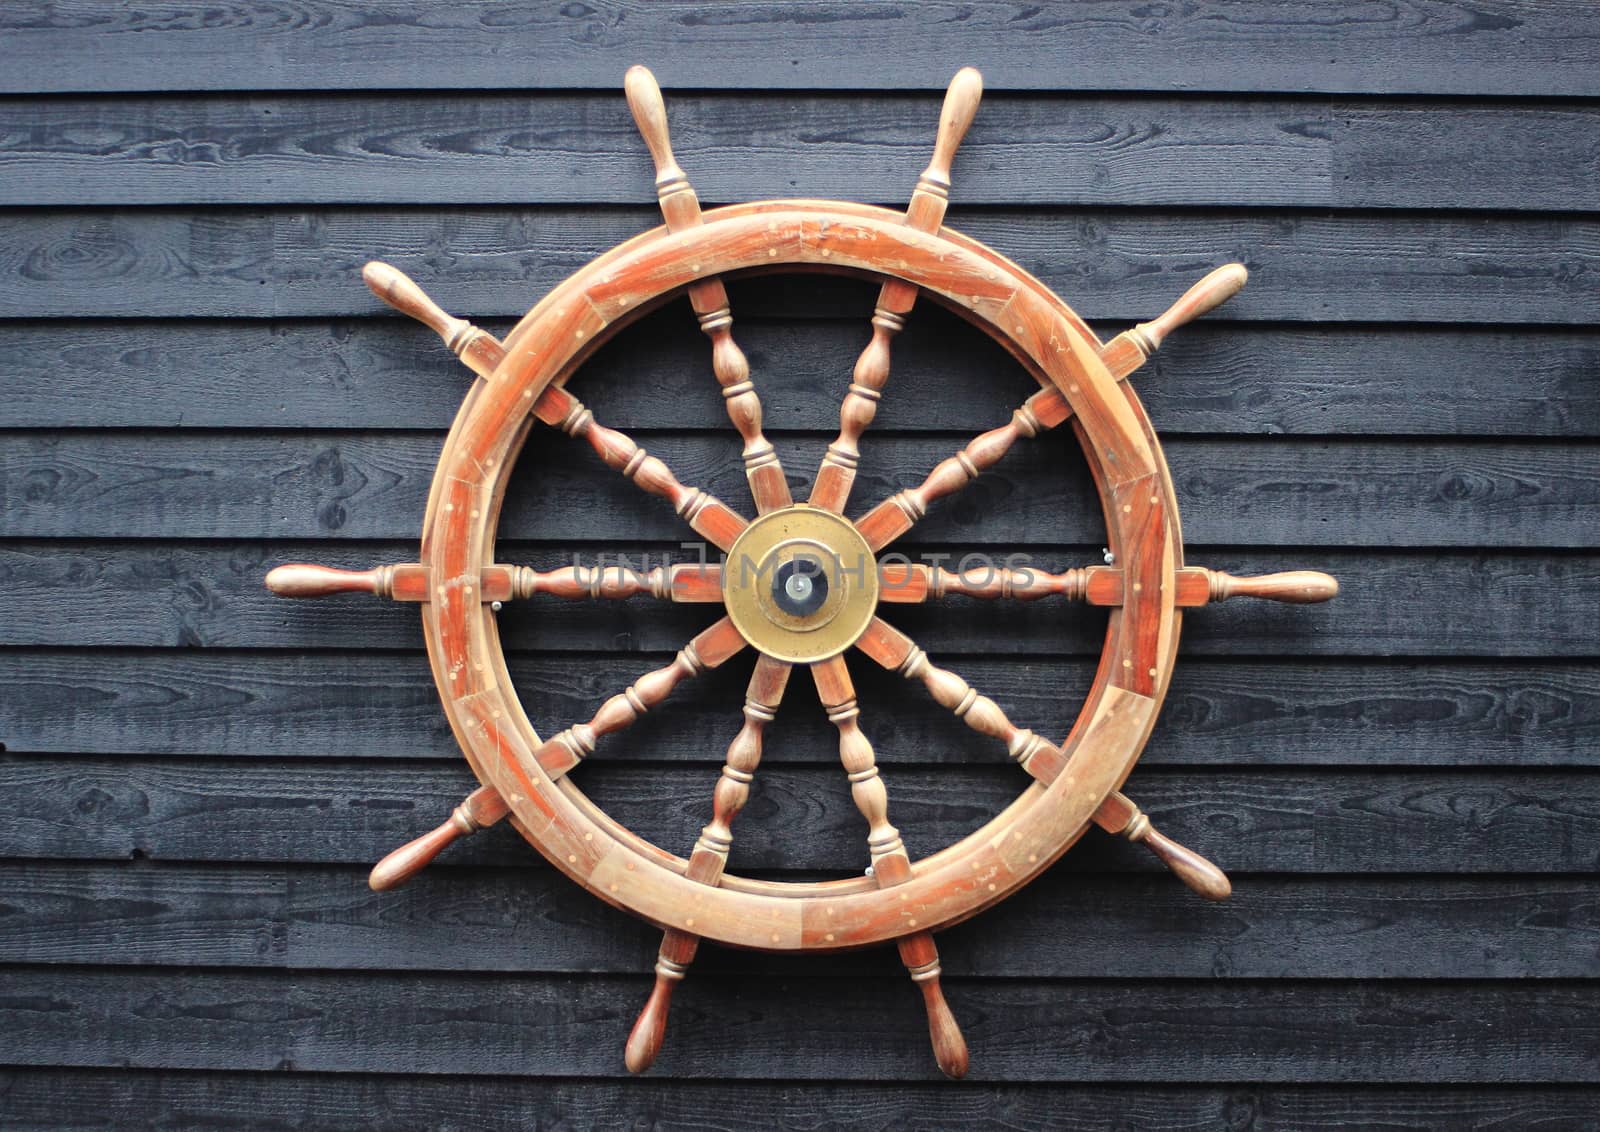 Old trawler steering wheel made of hardwood by HoleInTheBox